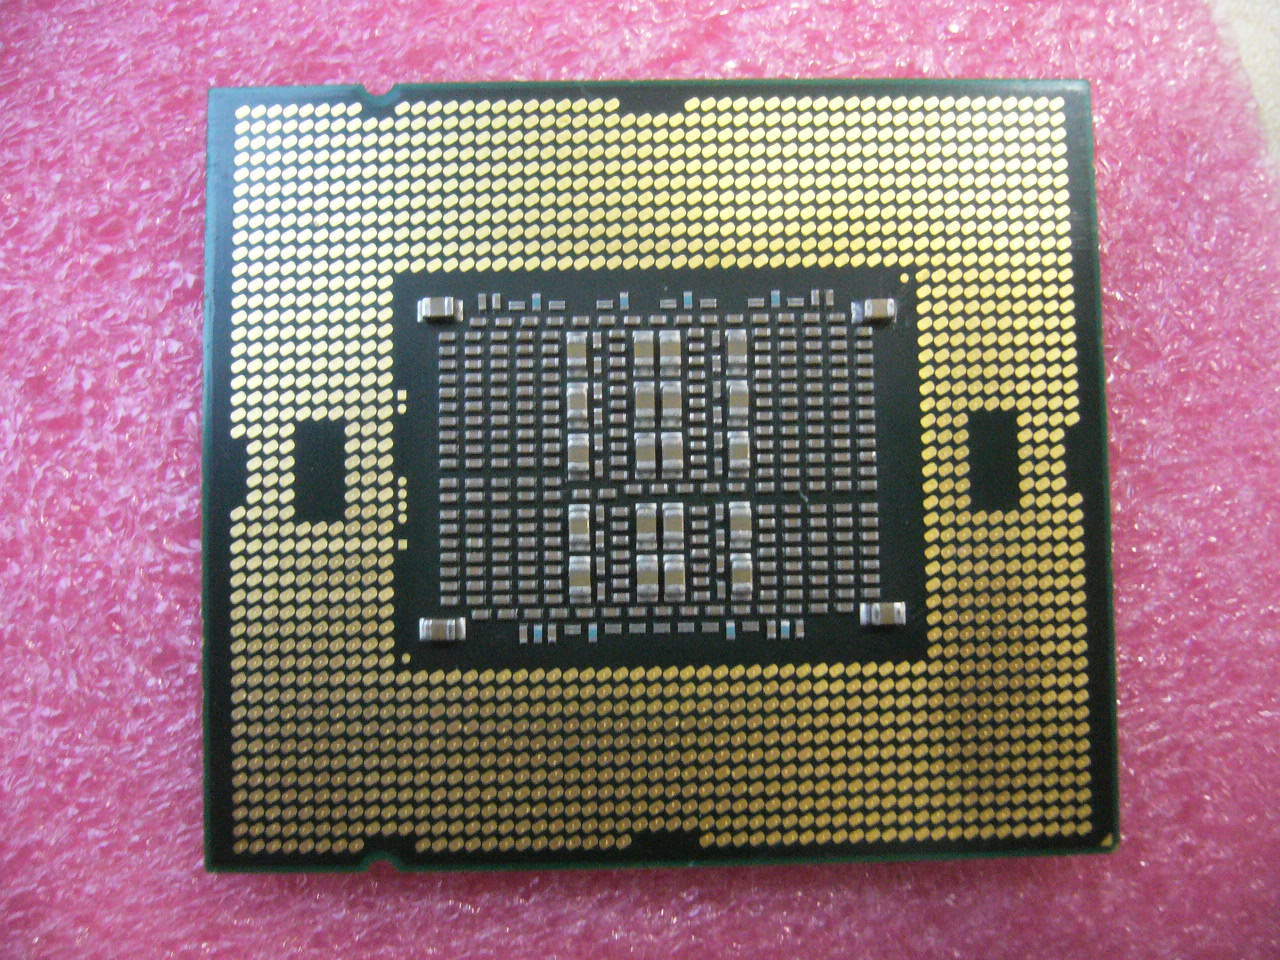 QTY 1x INTEL Ten-Cores CPU E7-4850 2.00GHZ/24MB/6.40 LGA1567 SLC3V - zum Schließen ins Bild klicken